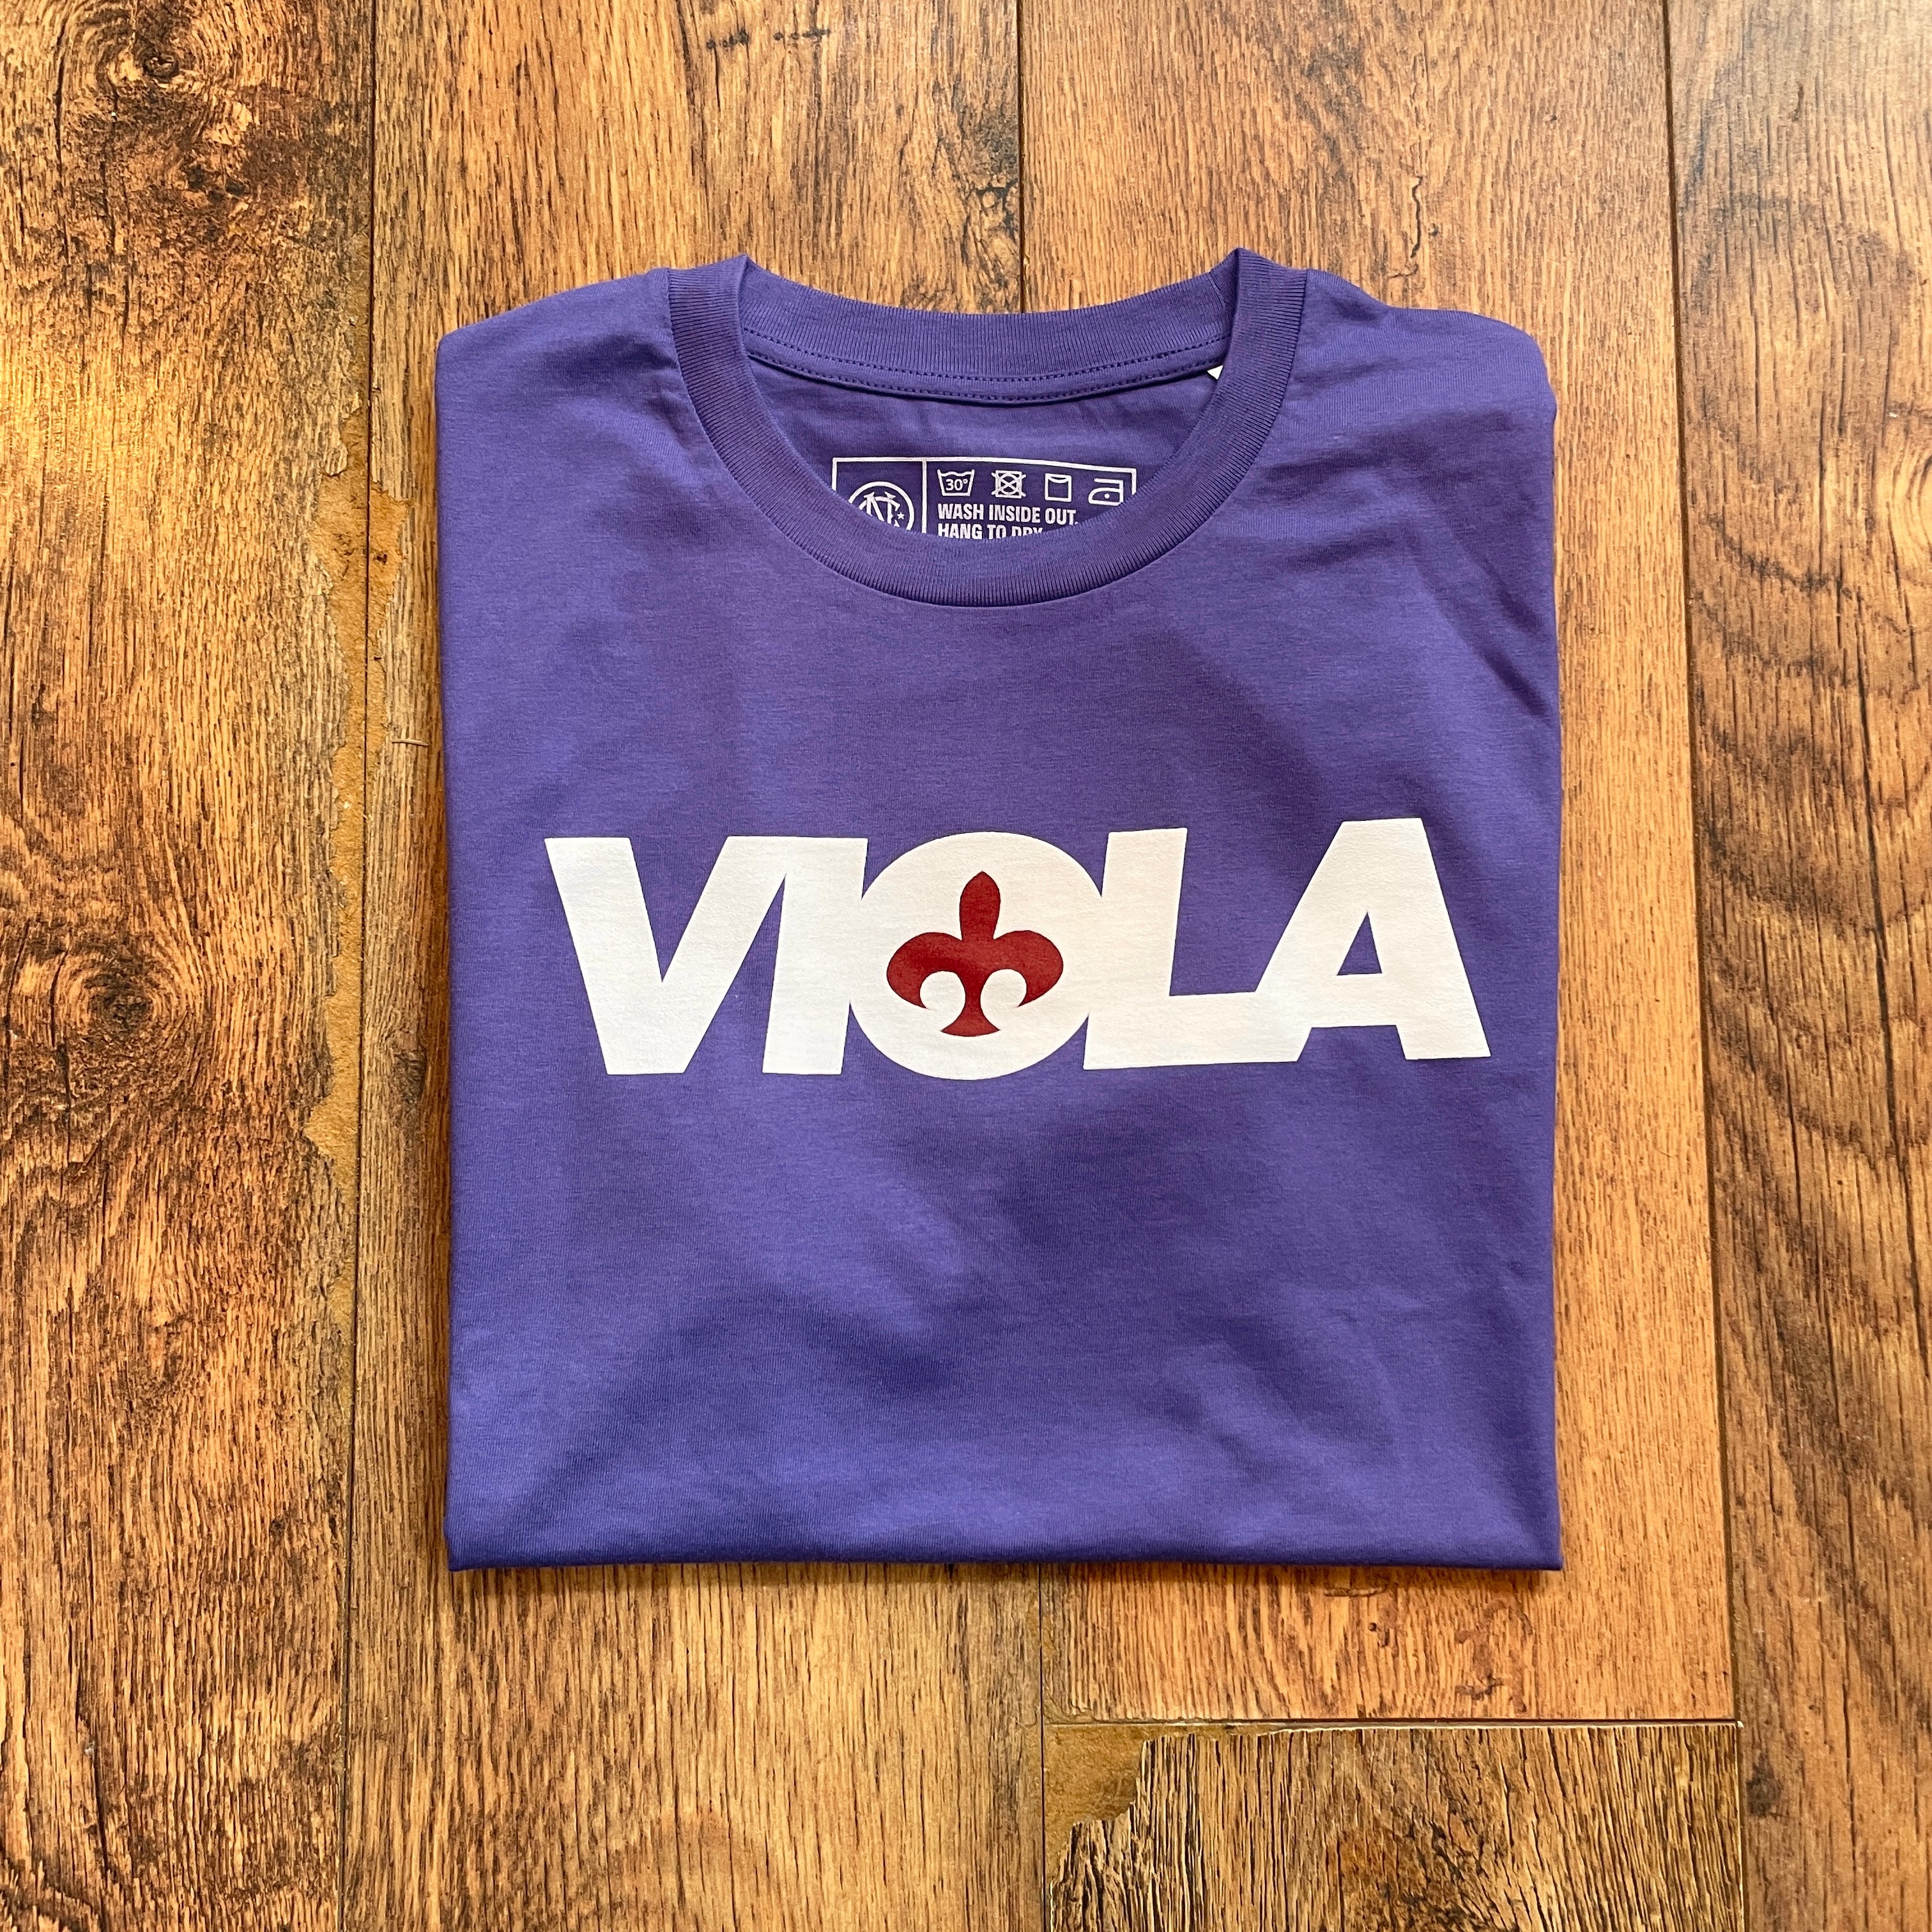 Fiorentina shirt t-shirt